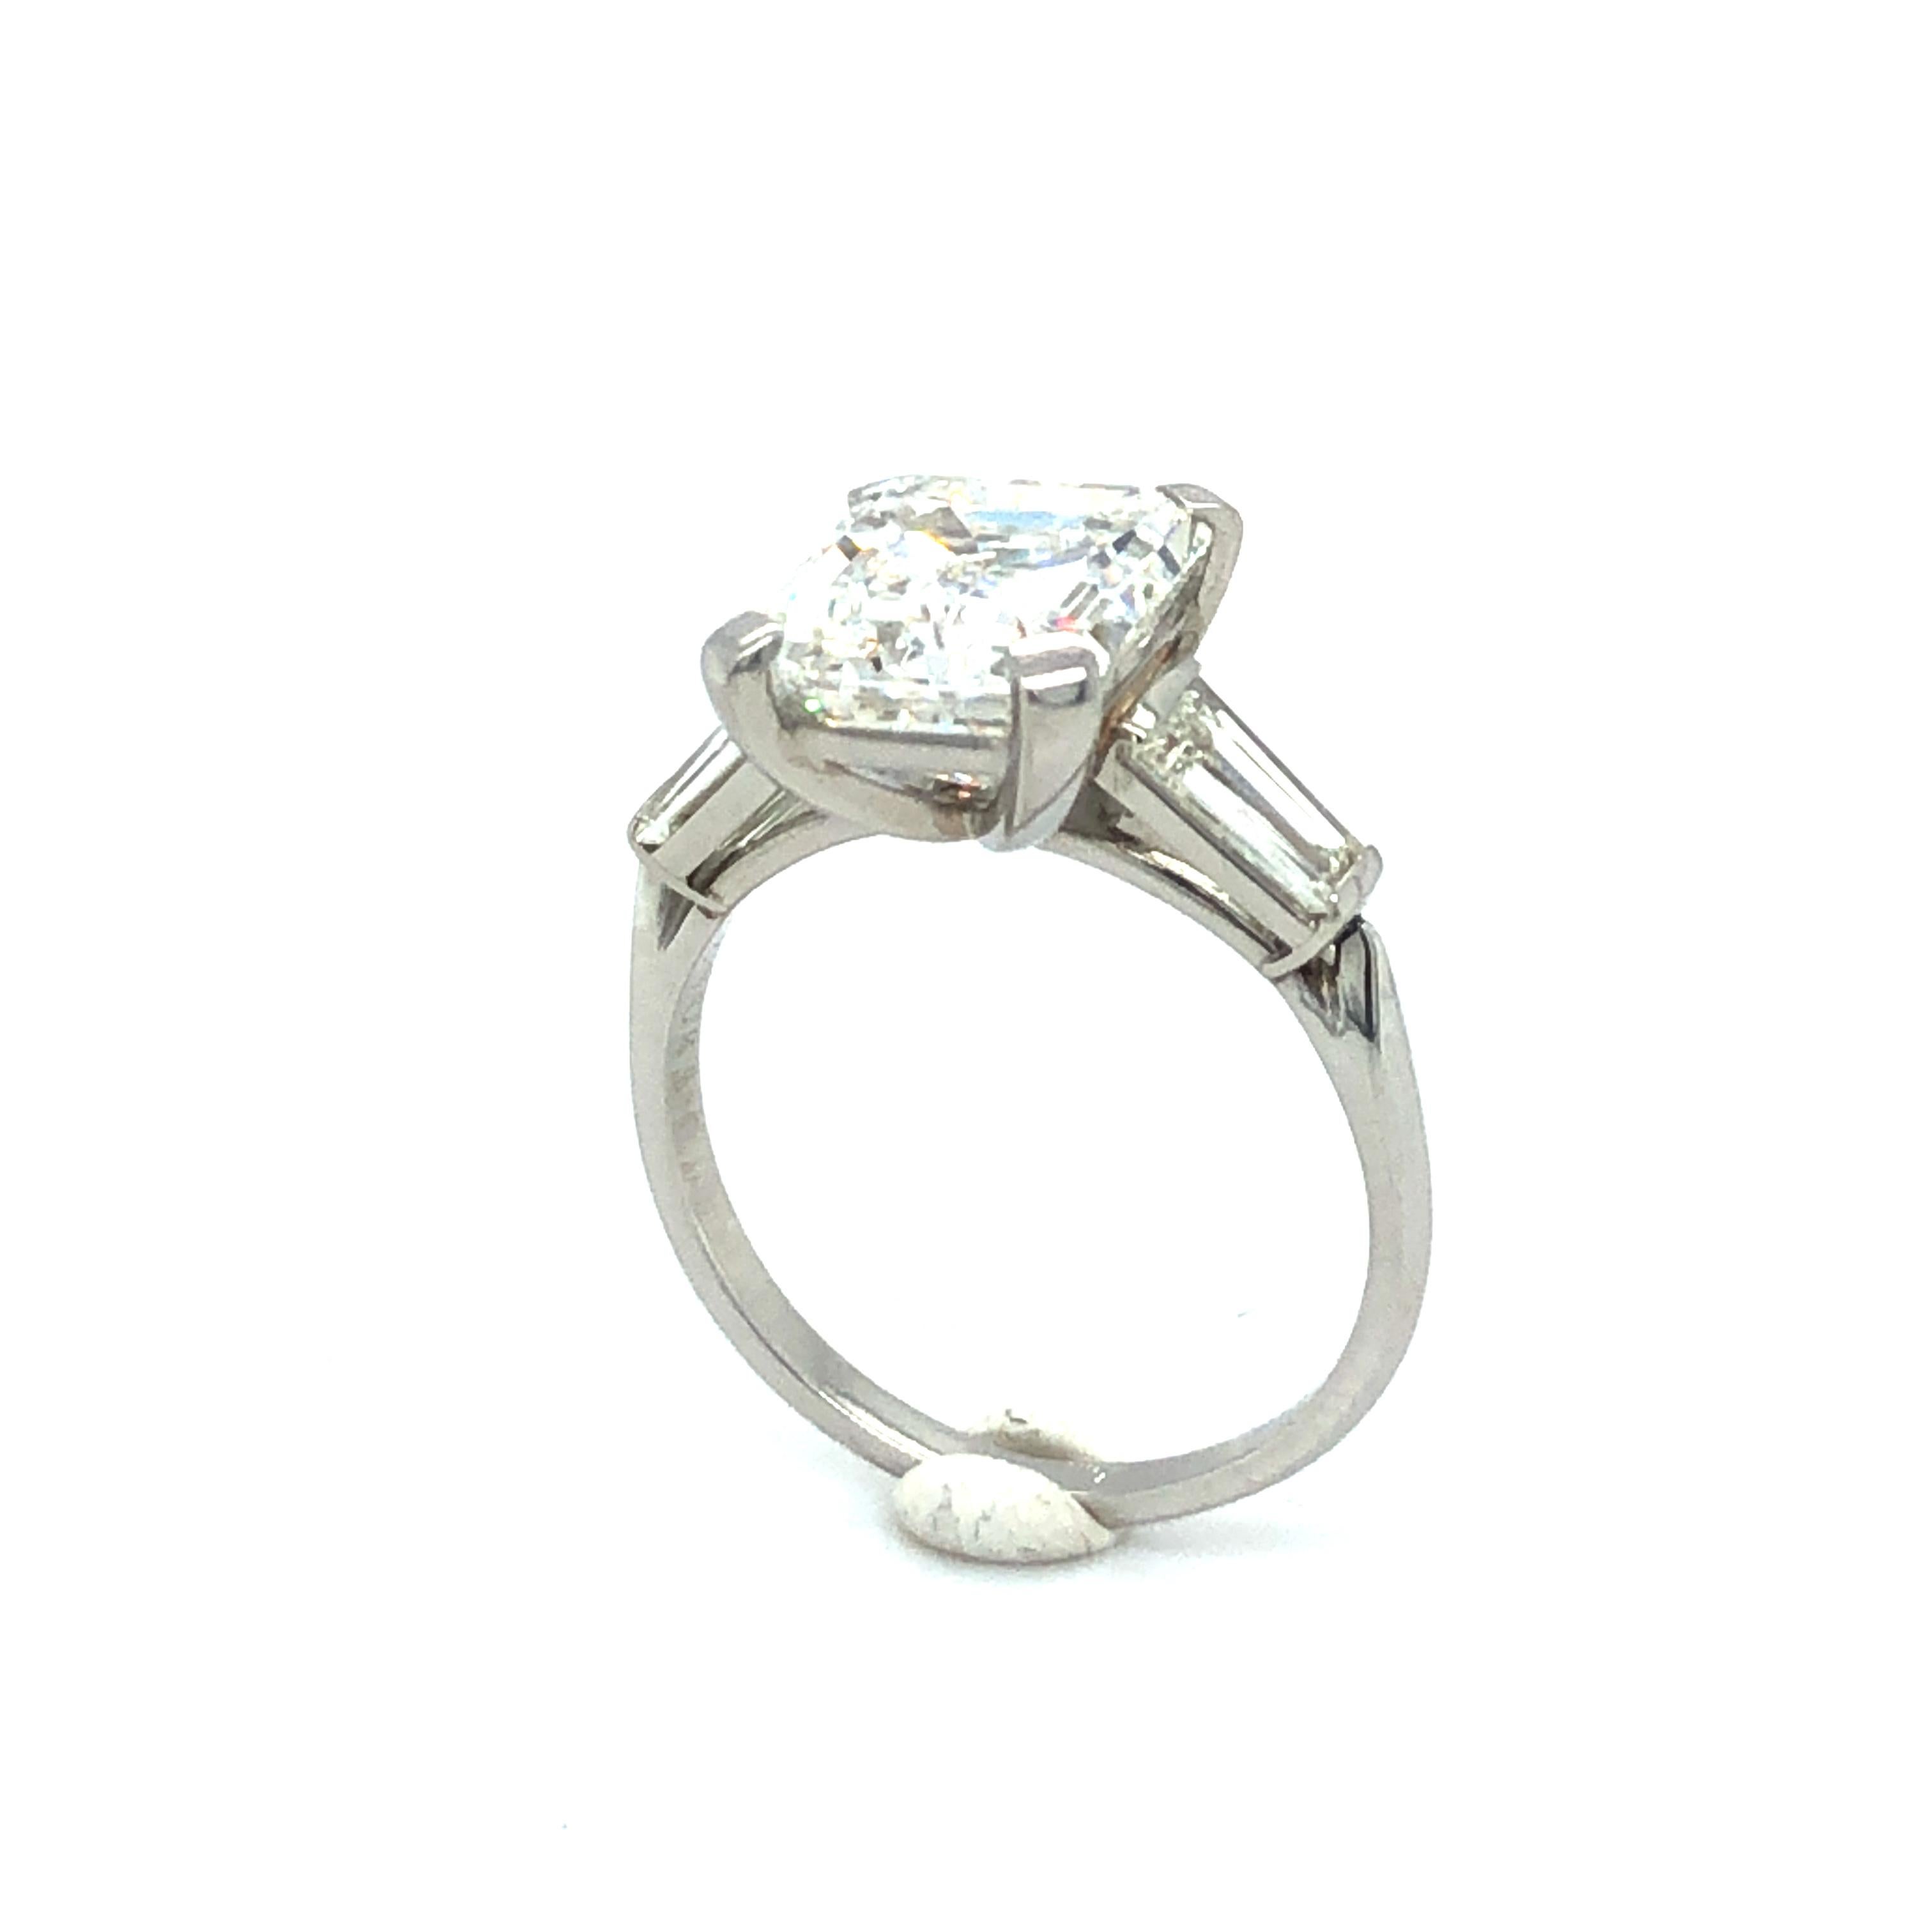 GIA Certified 4.19 Carat Emerald Cut Diamond Ring in Platinum 950 3